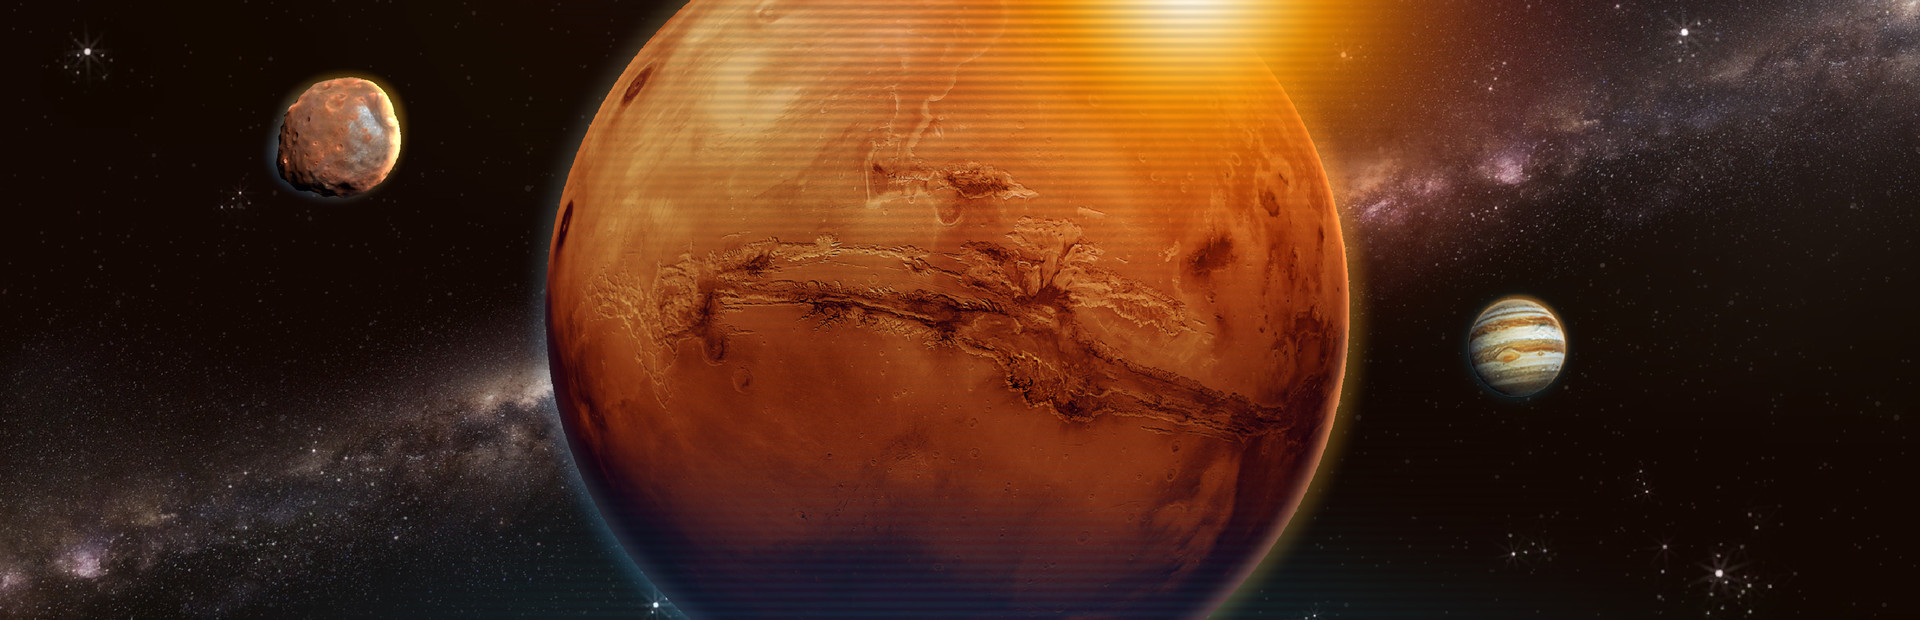 Terraforming Mars cover image